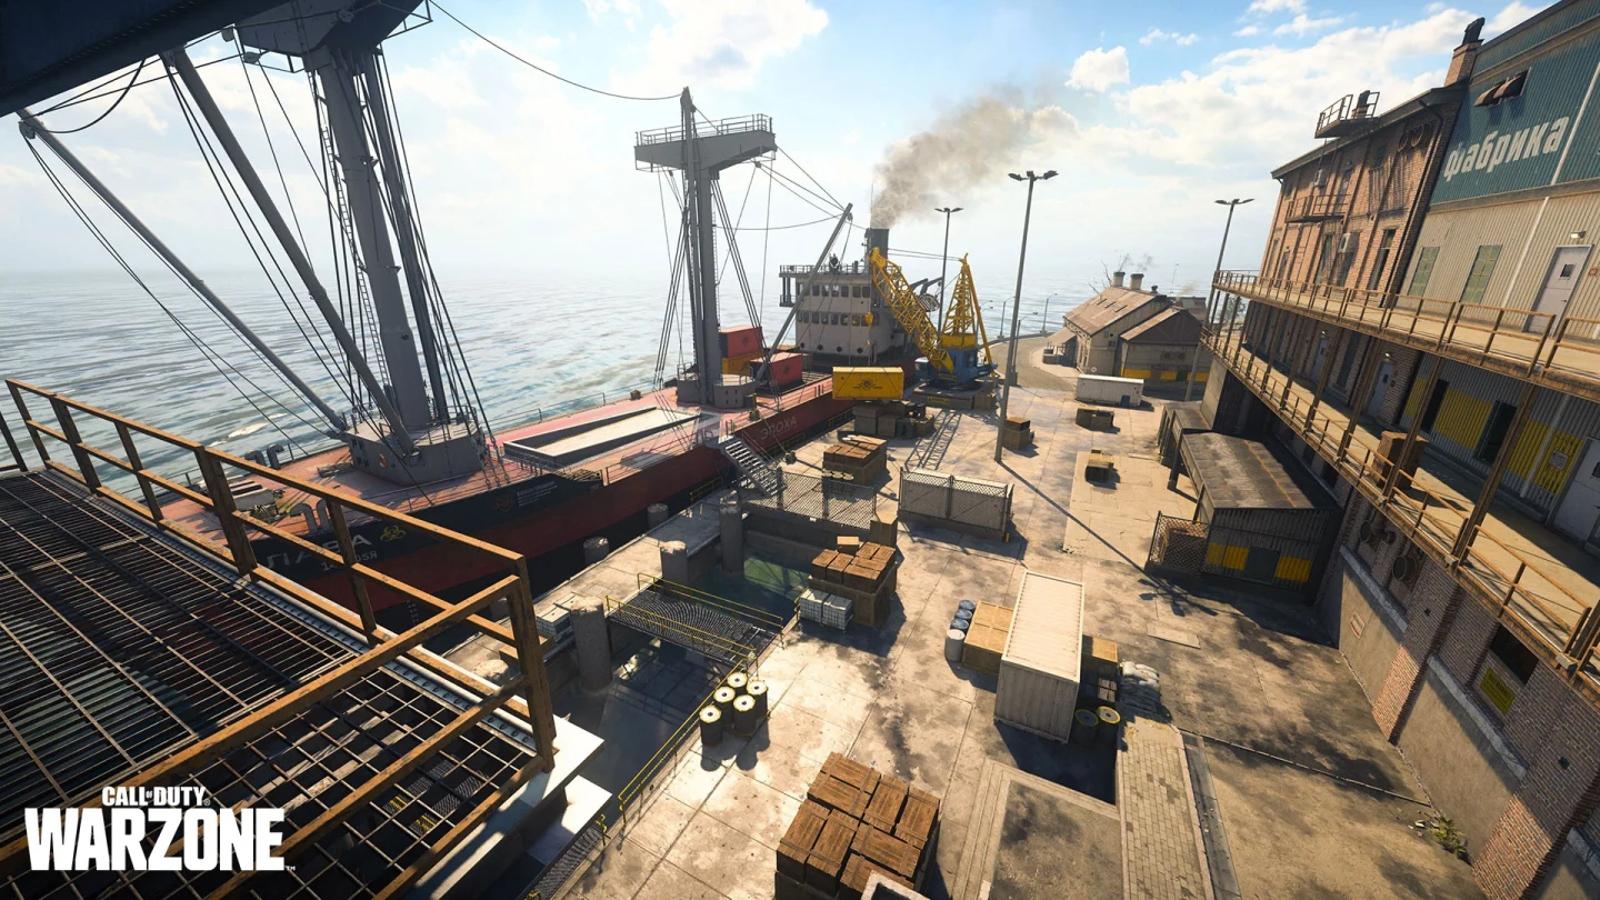 rebirth islandn docking yard